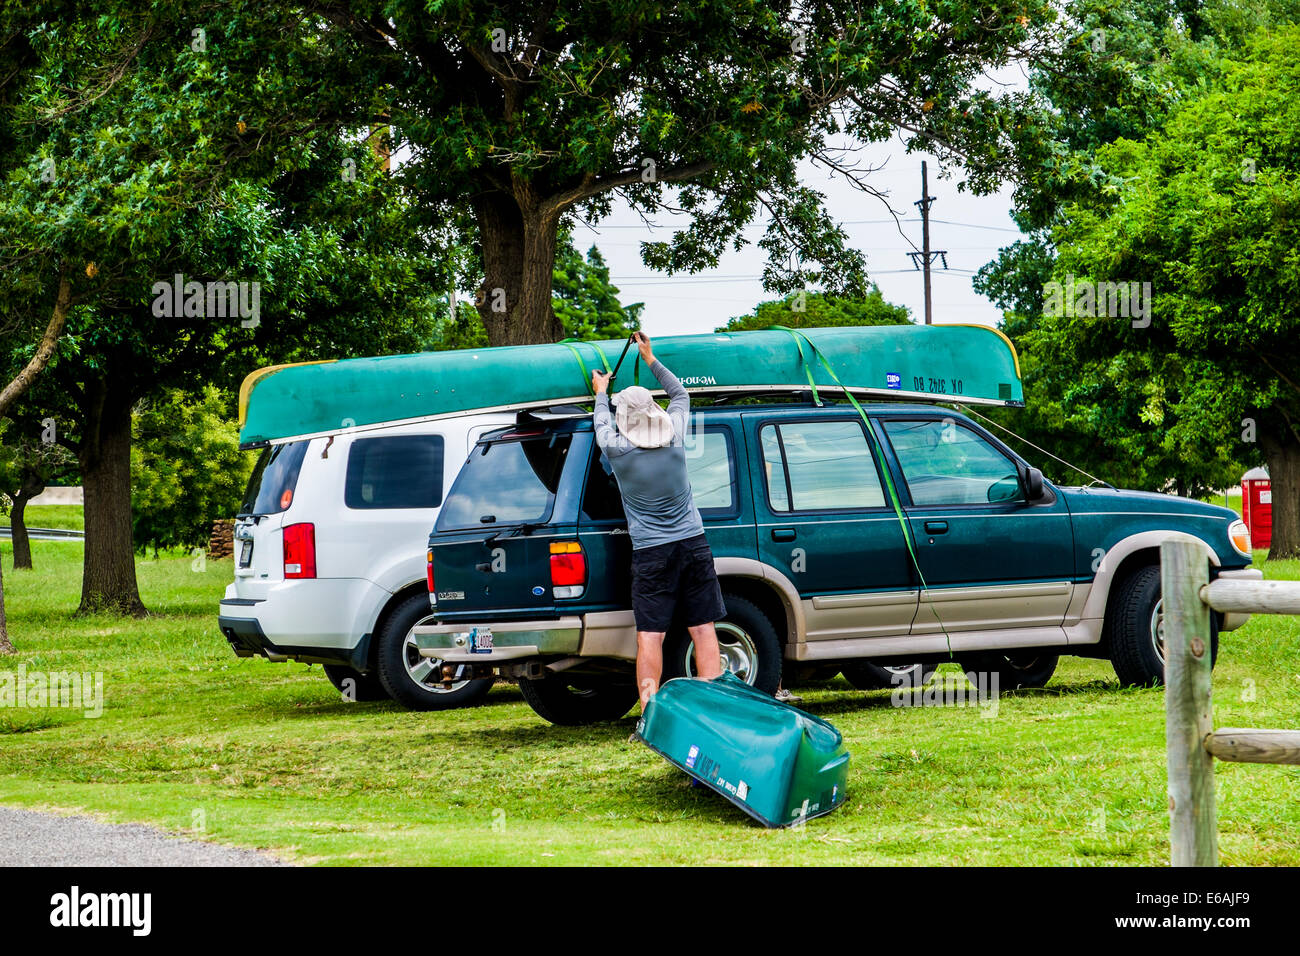 A man secures a canoe on the top of his vehicle at an Oklahoma lake. Oklahoma City, Oklahoma, USA. Stock Photo